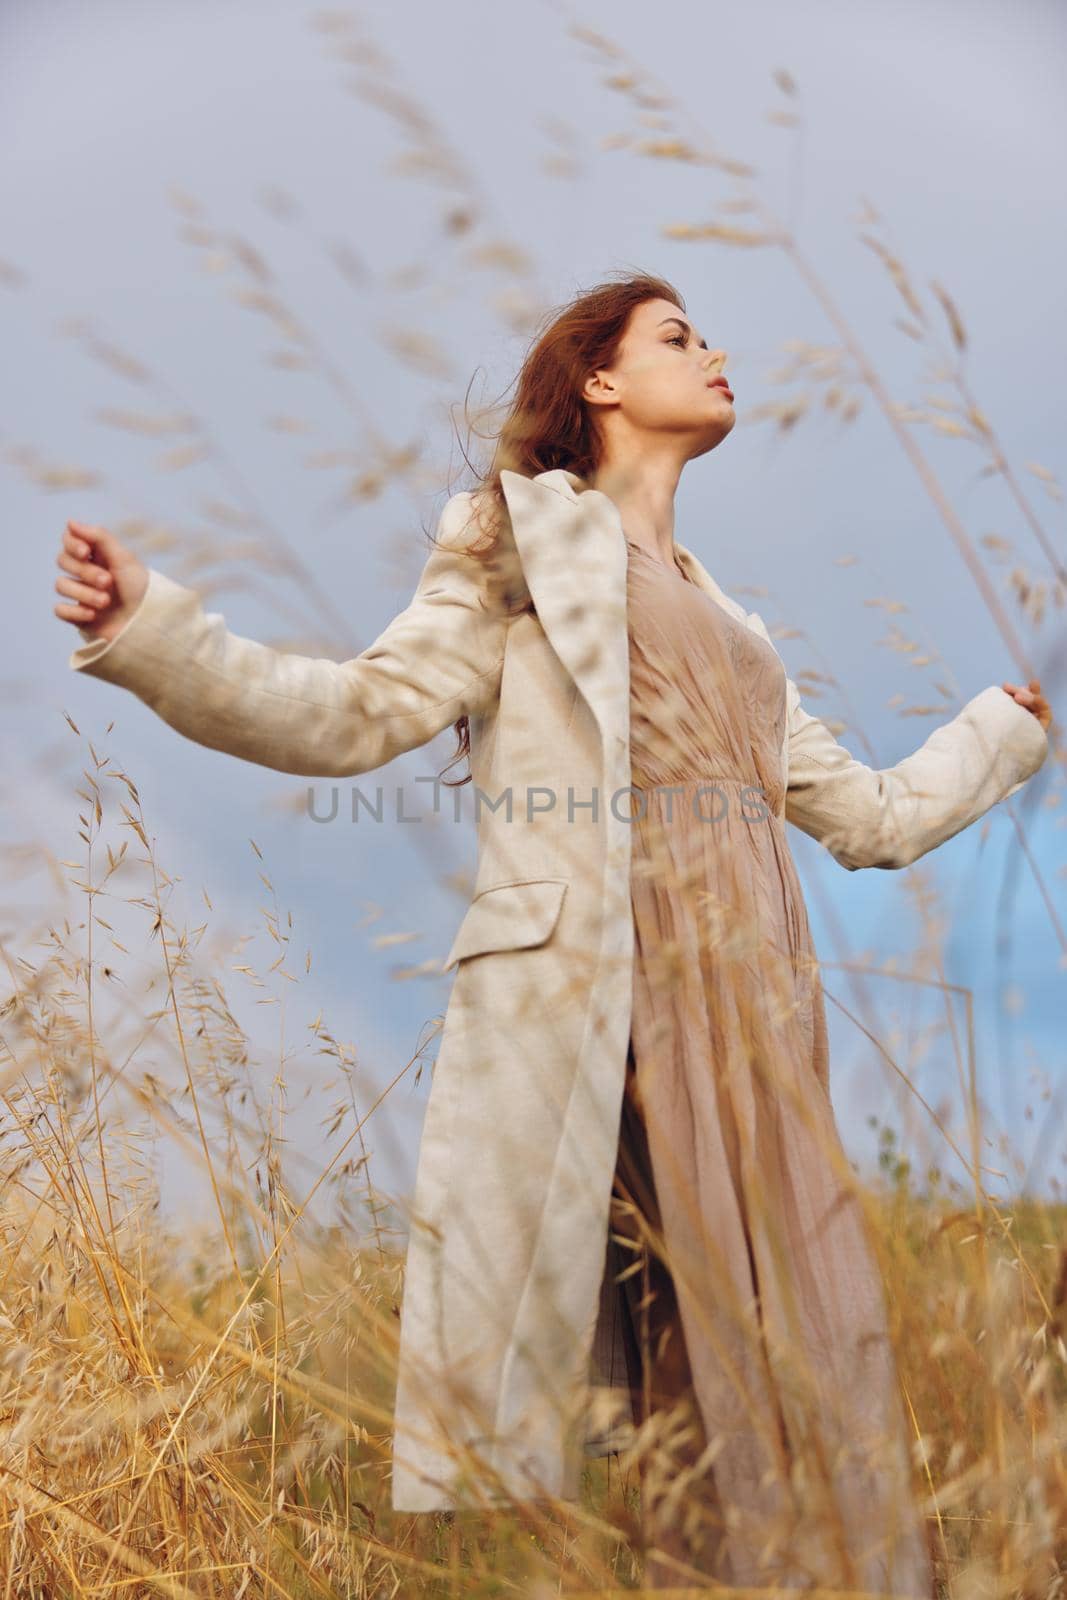 beautiful woman walk in the field autumn season concept by SHOTPRIME